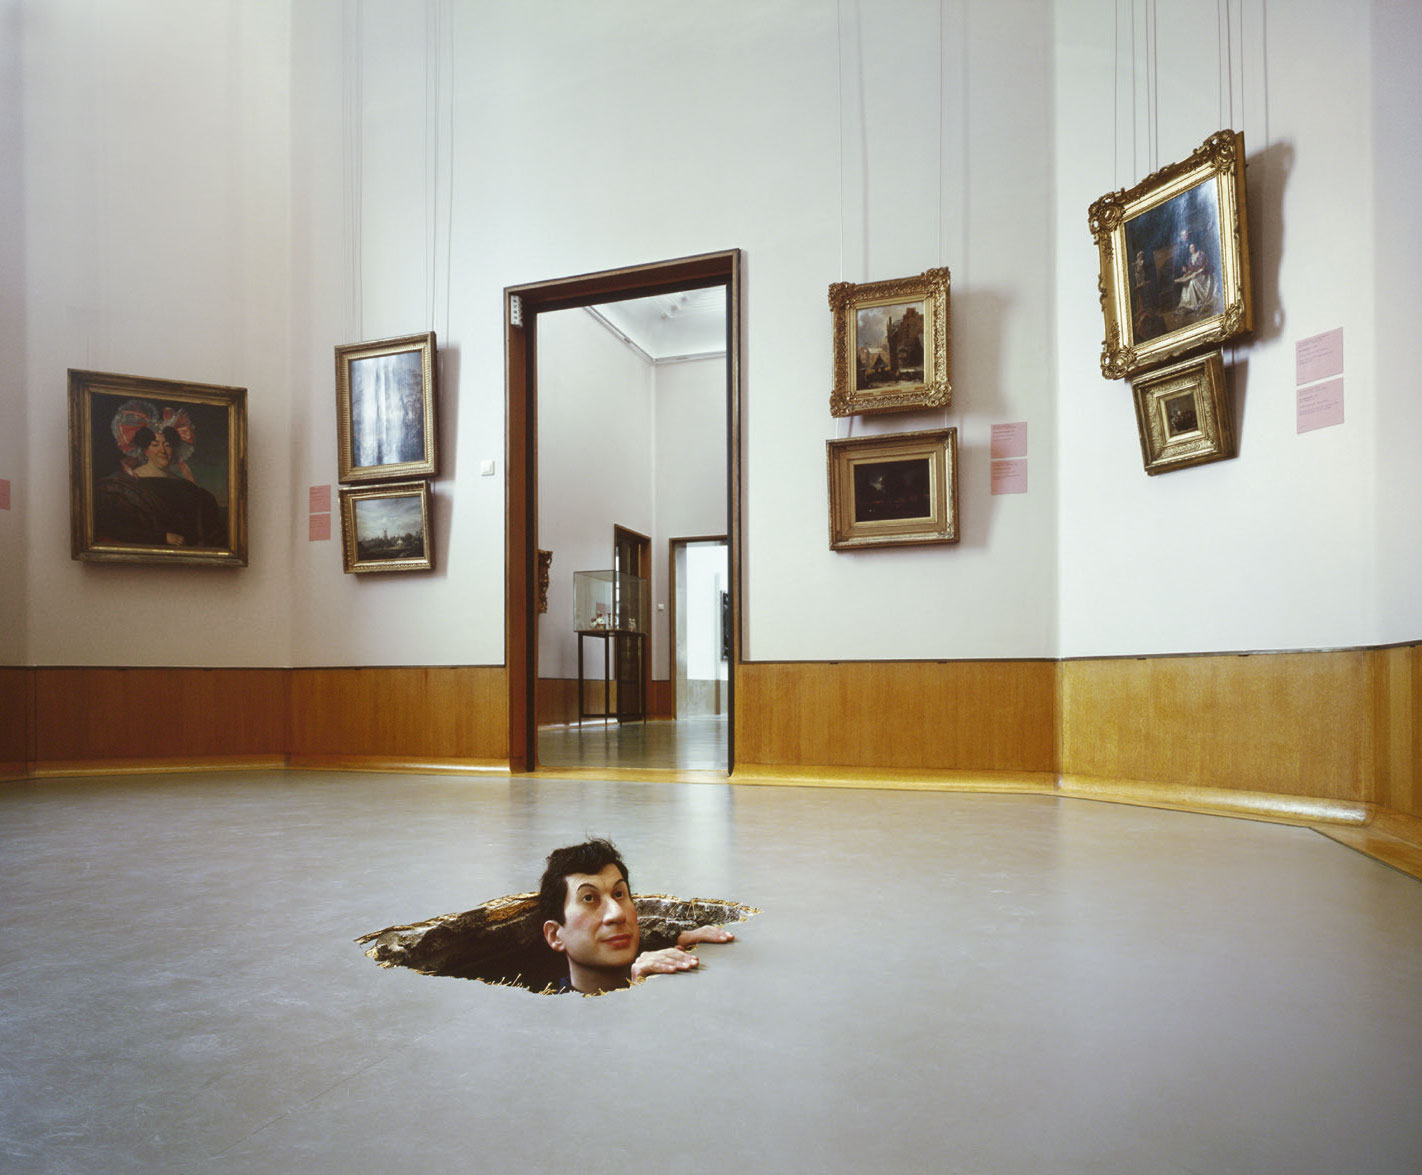 Untitled, 2001, by Maurizo Cattelan, Museum Boijmans Van Beuningen, Rotterdam, The Netherlands 